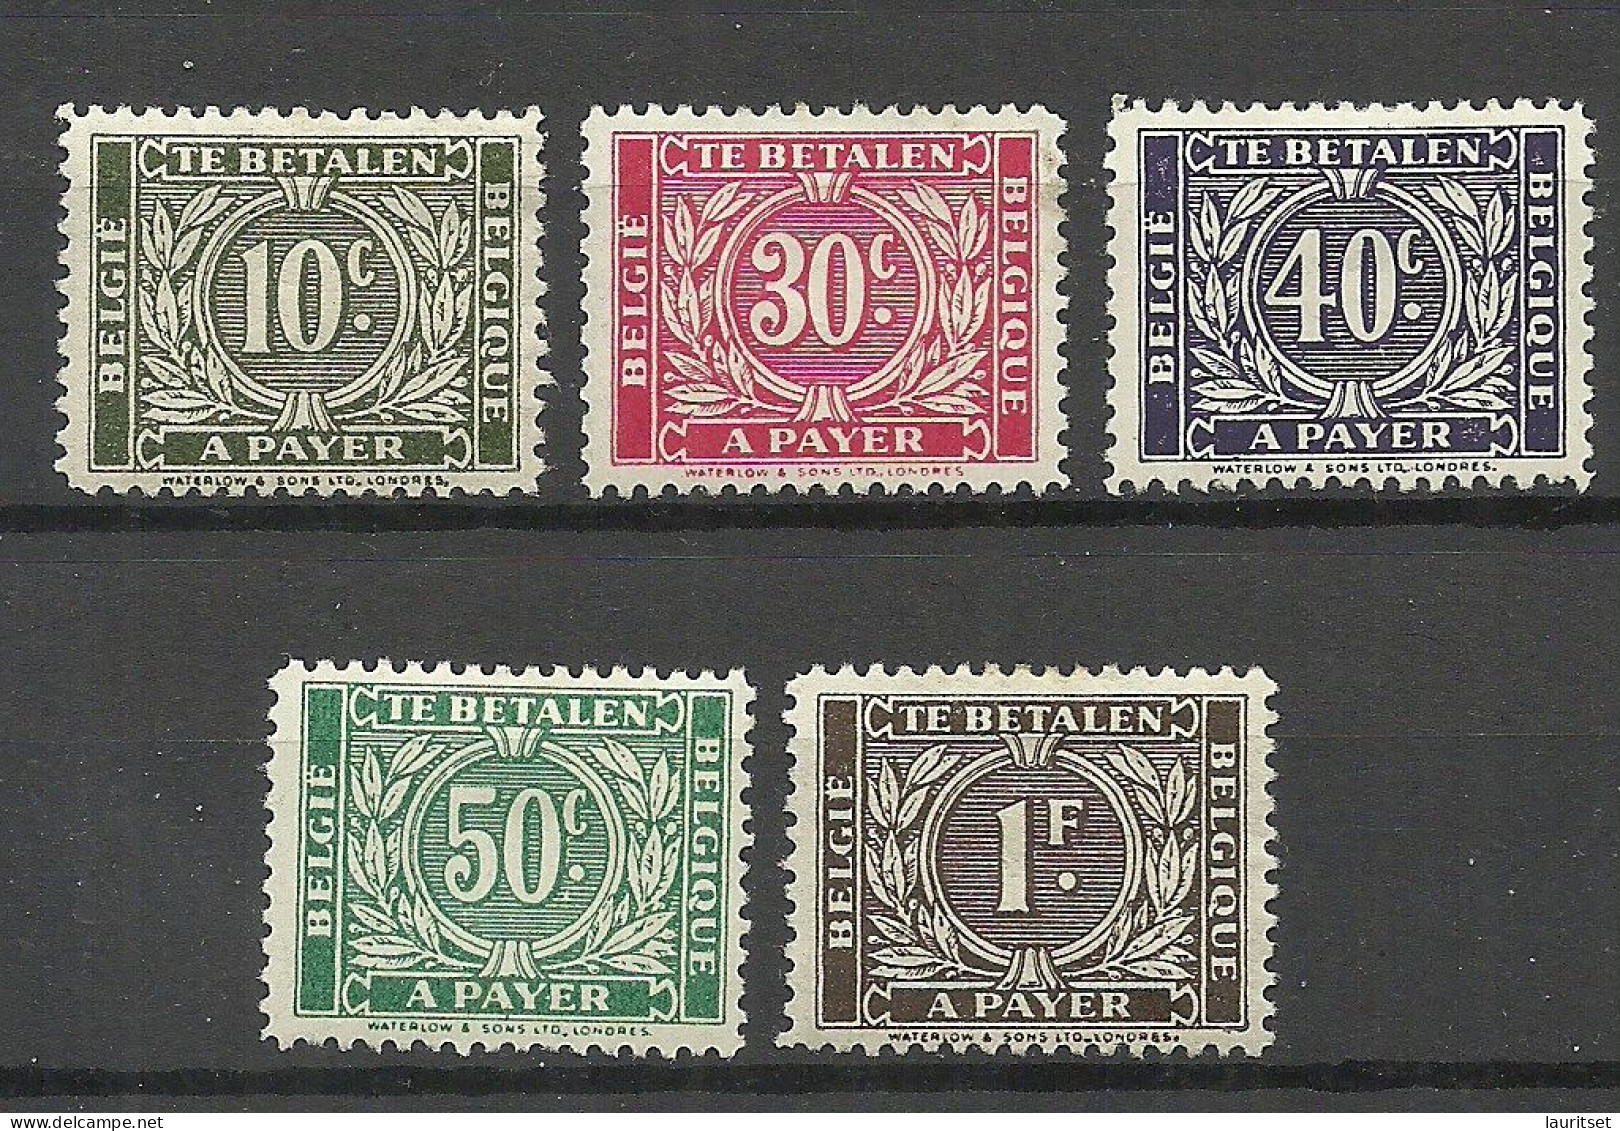 BELGIEN Belgium Belgique 1945 =5 Values From Set Michel 49 - 45 A Payer Te Betalen Portomarken Postage Due * - Sellos